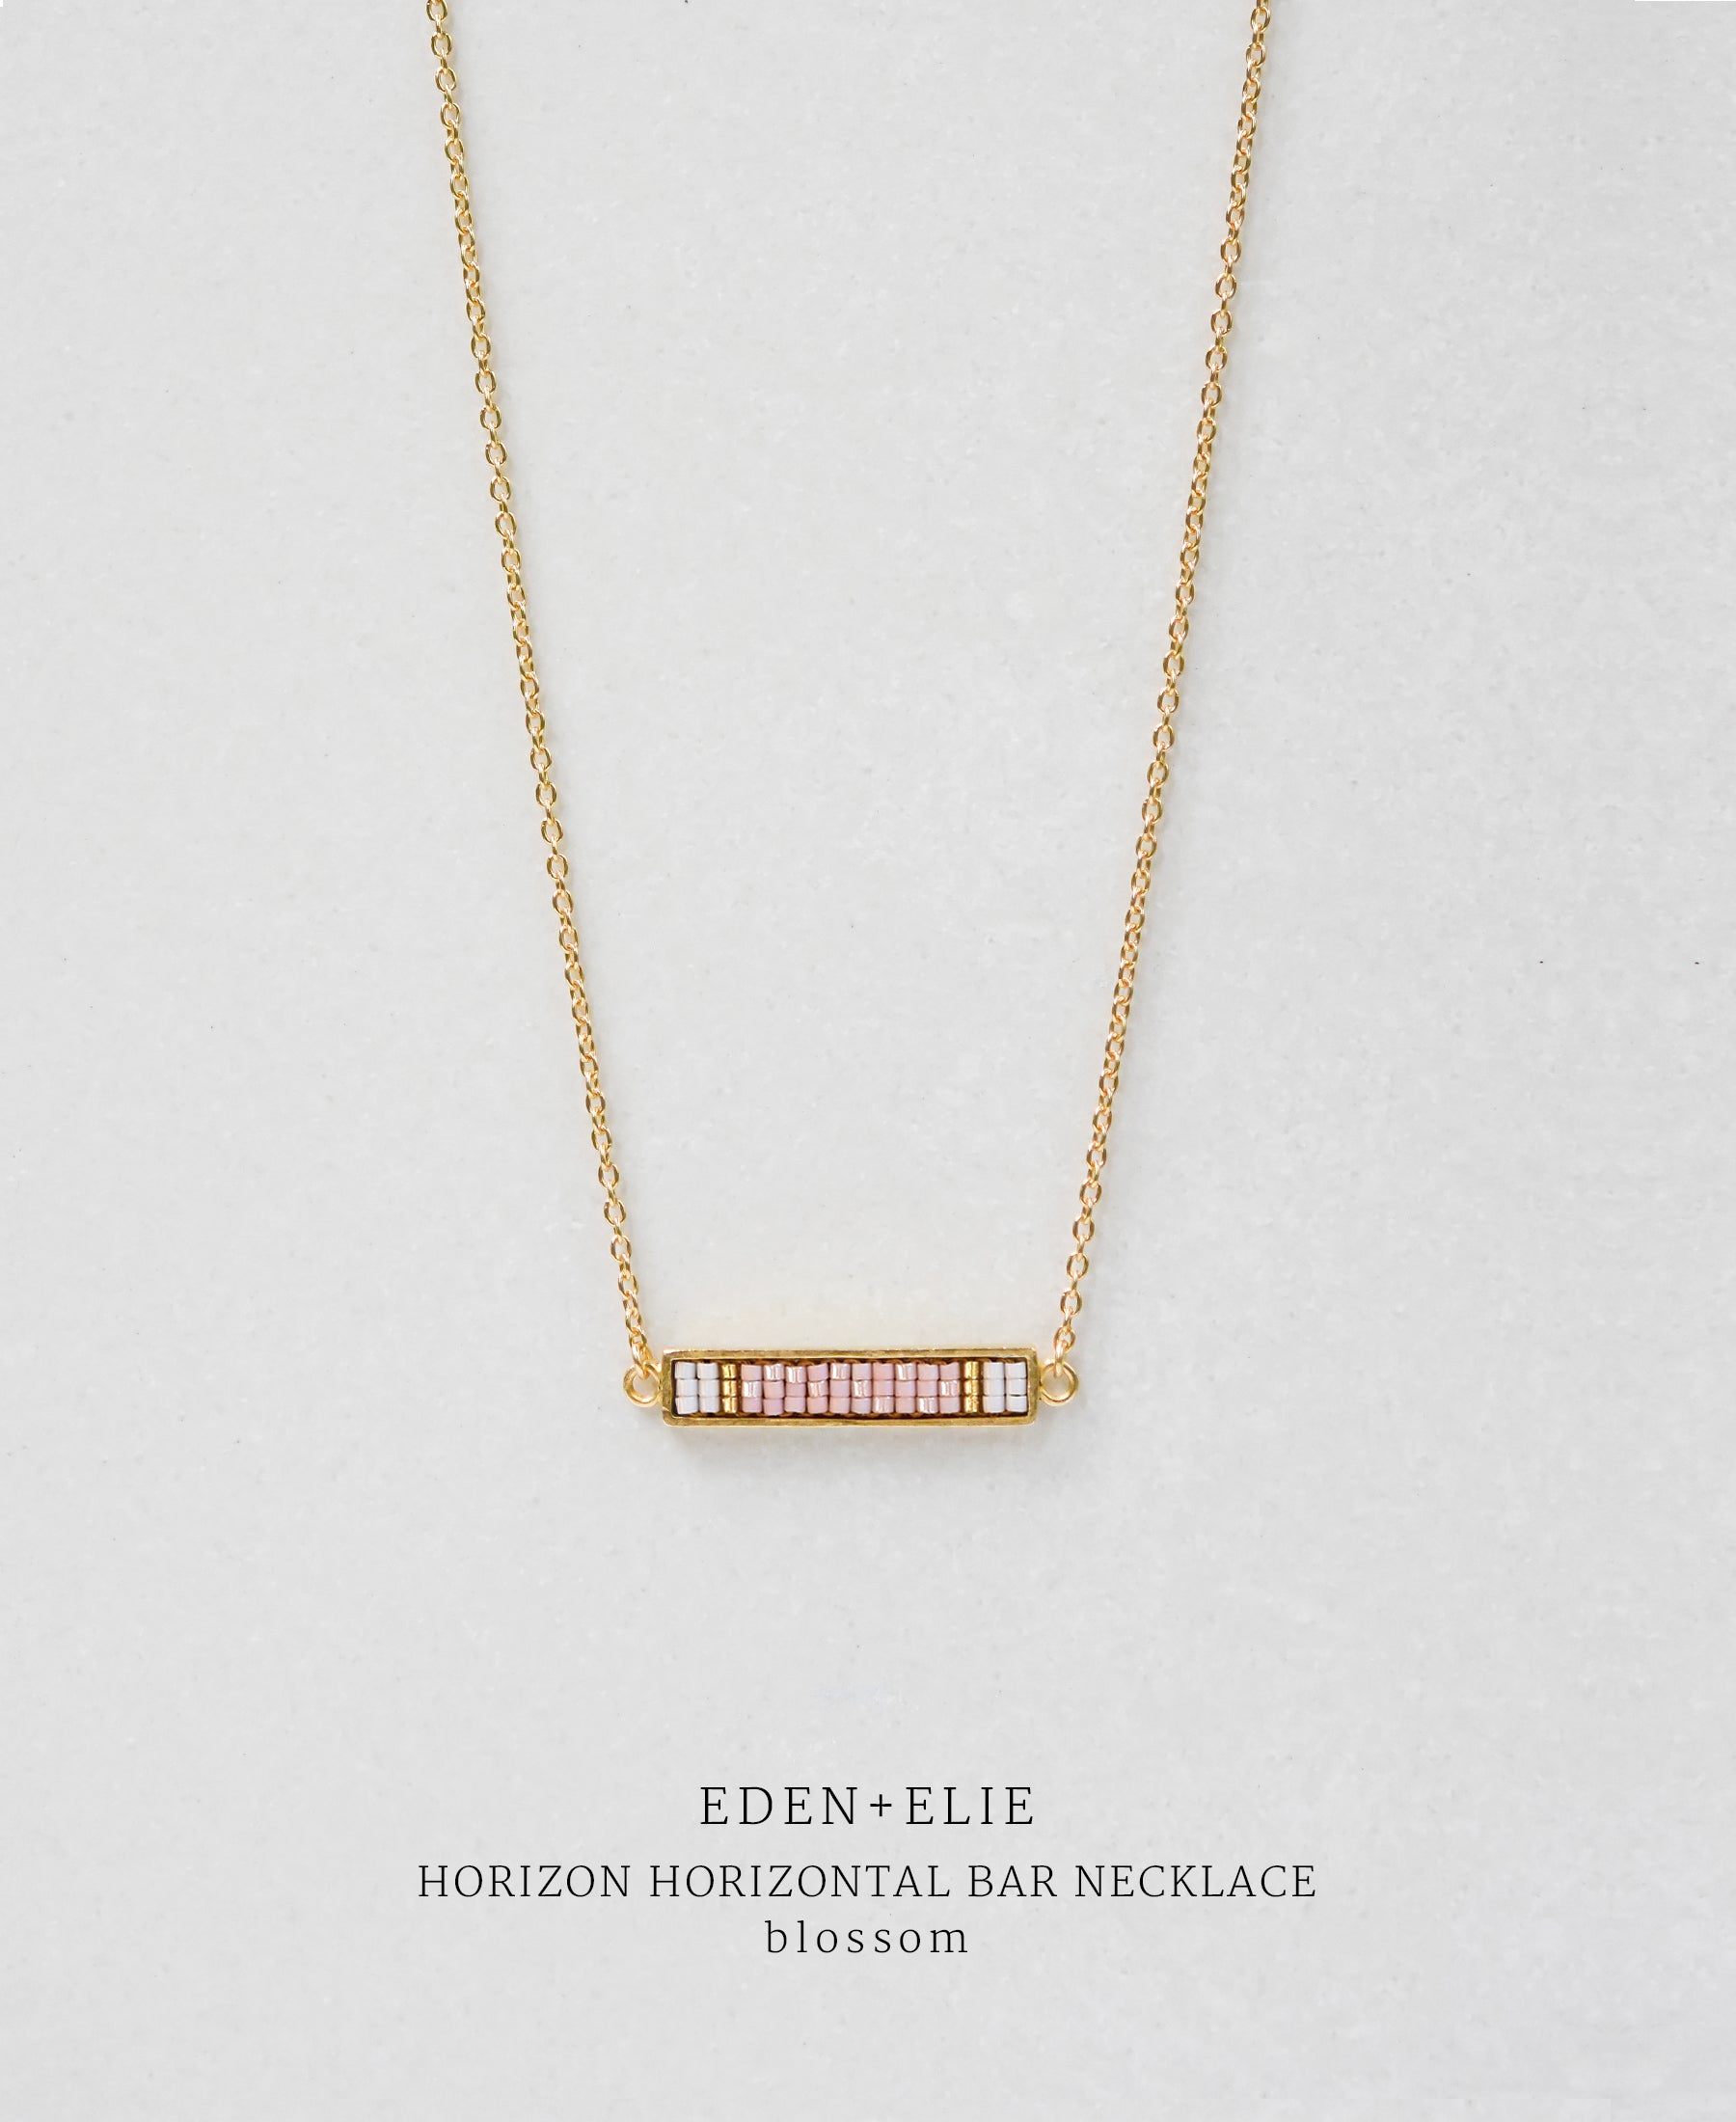 EDEN + ELIE Horizon Horizontal bar necklace - blossom pink